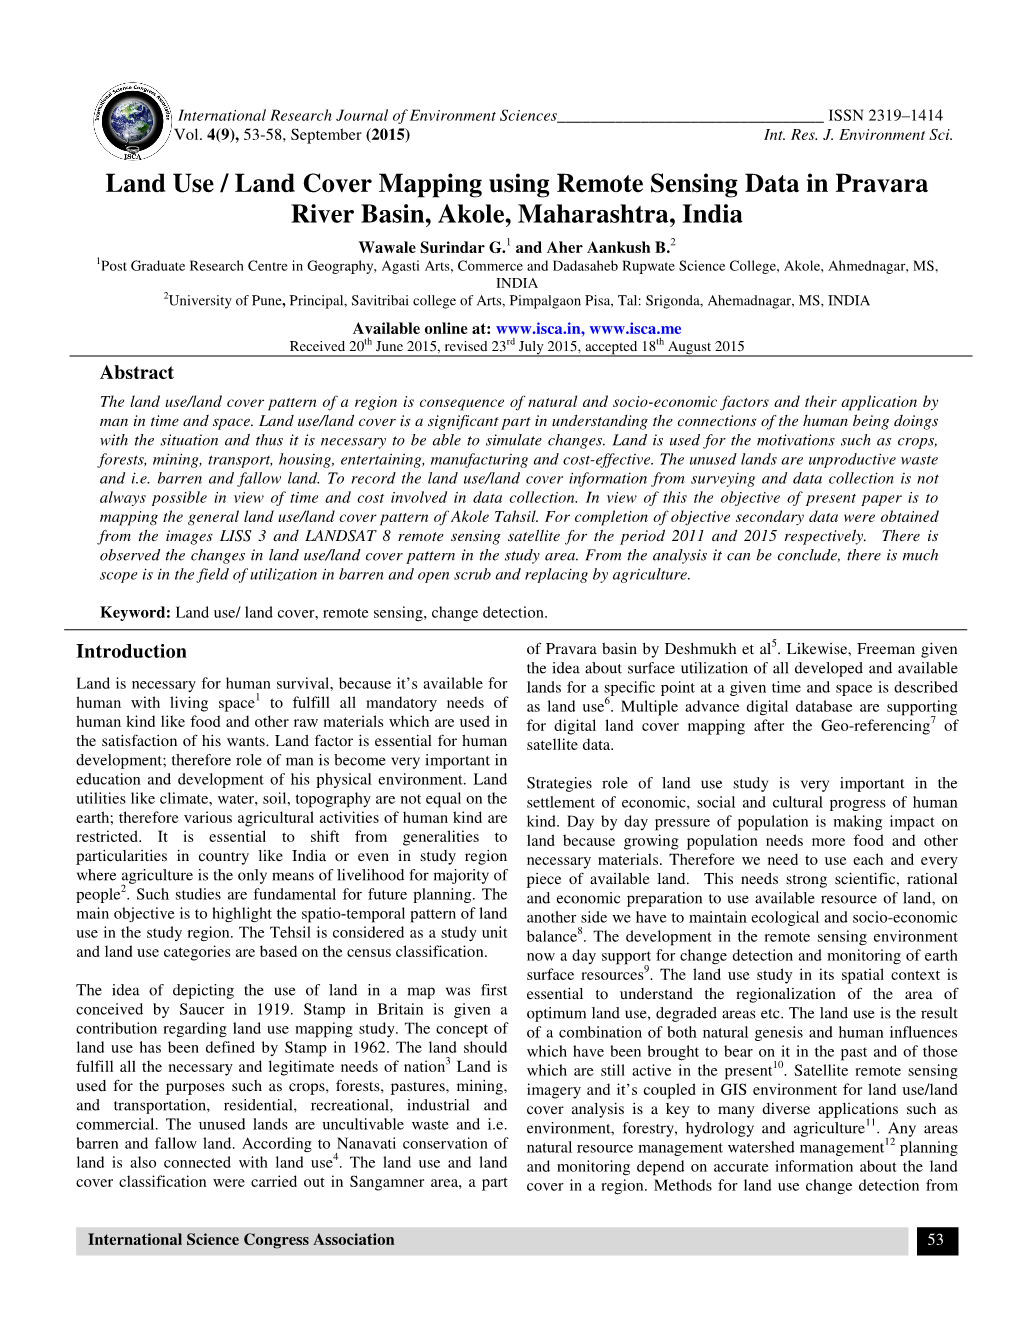 Land Use / Land Cover Mapping Using Remote Sensing Data in Pravara River Basin, Akole, Maharashtra, India